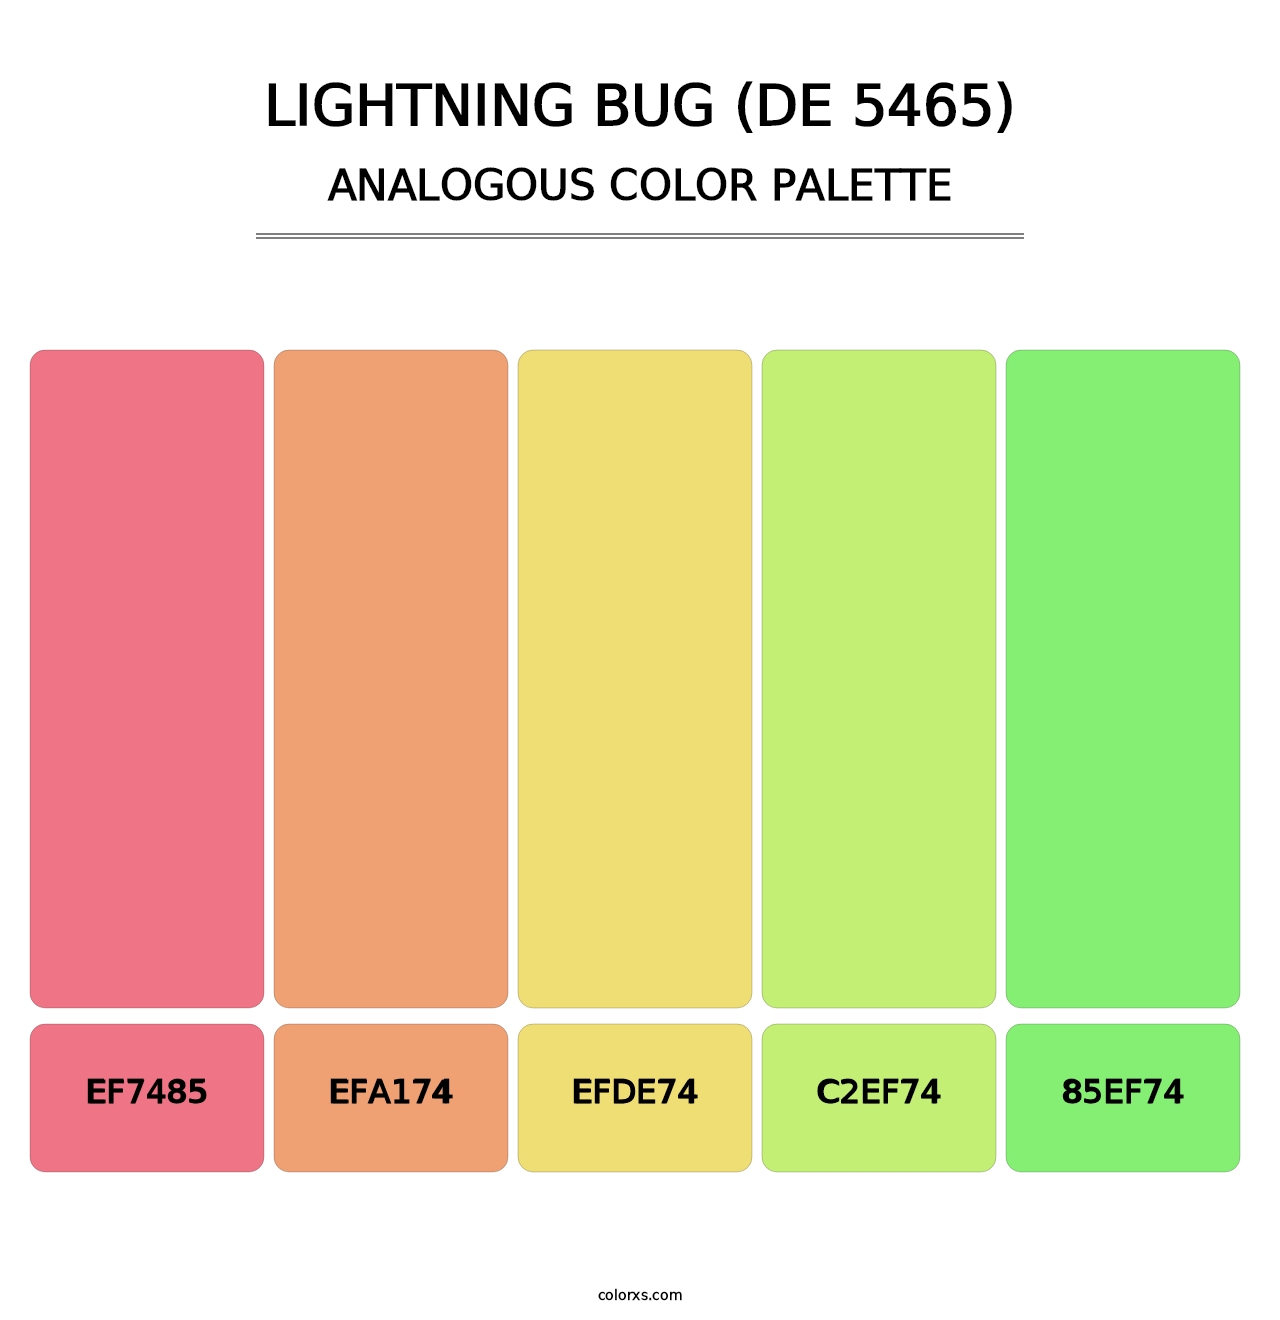 Lightning Bug (DE 5465) - Analogous Color Palette